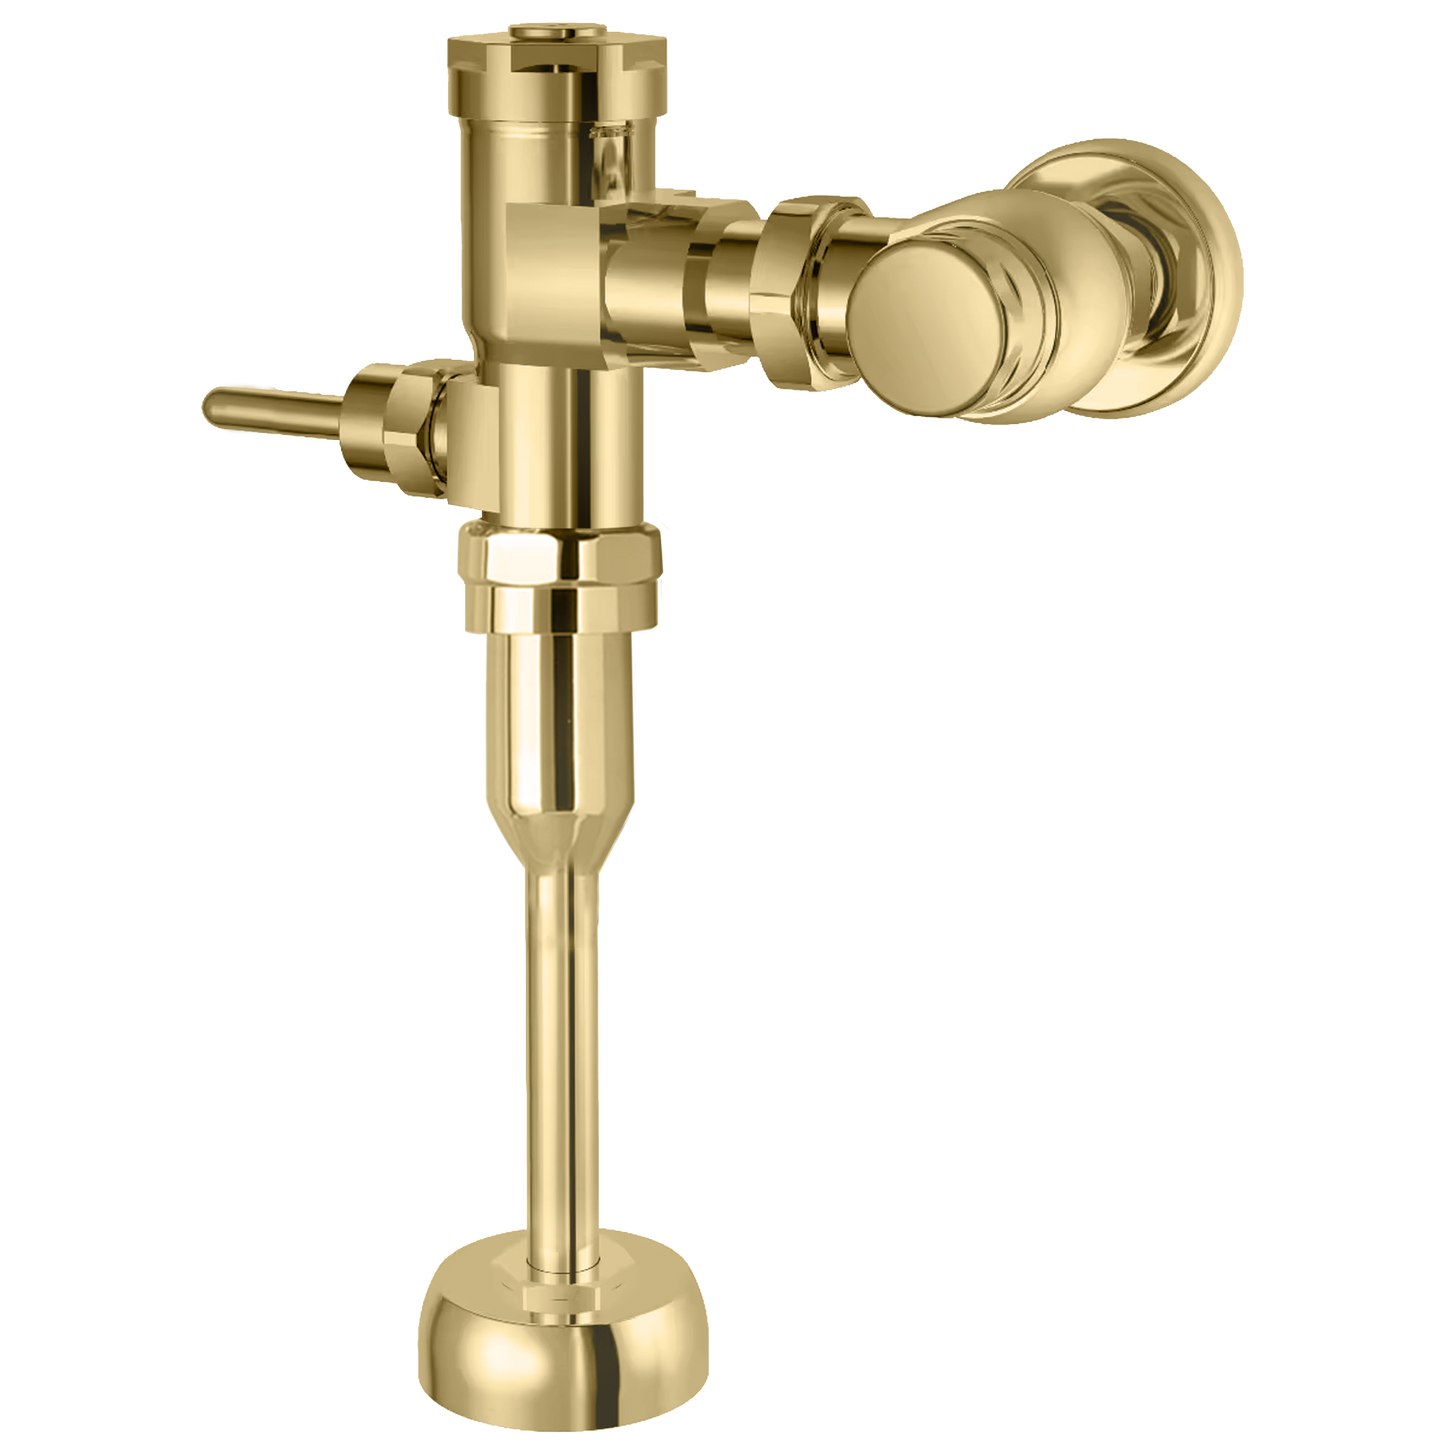 MUV-1 Manual Urinal Flush Valve in Polished Gold